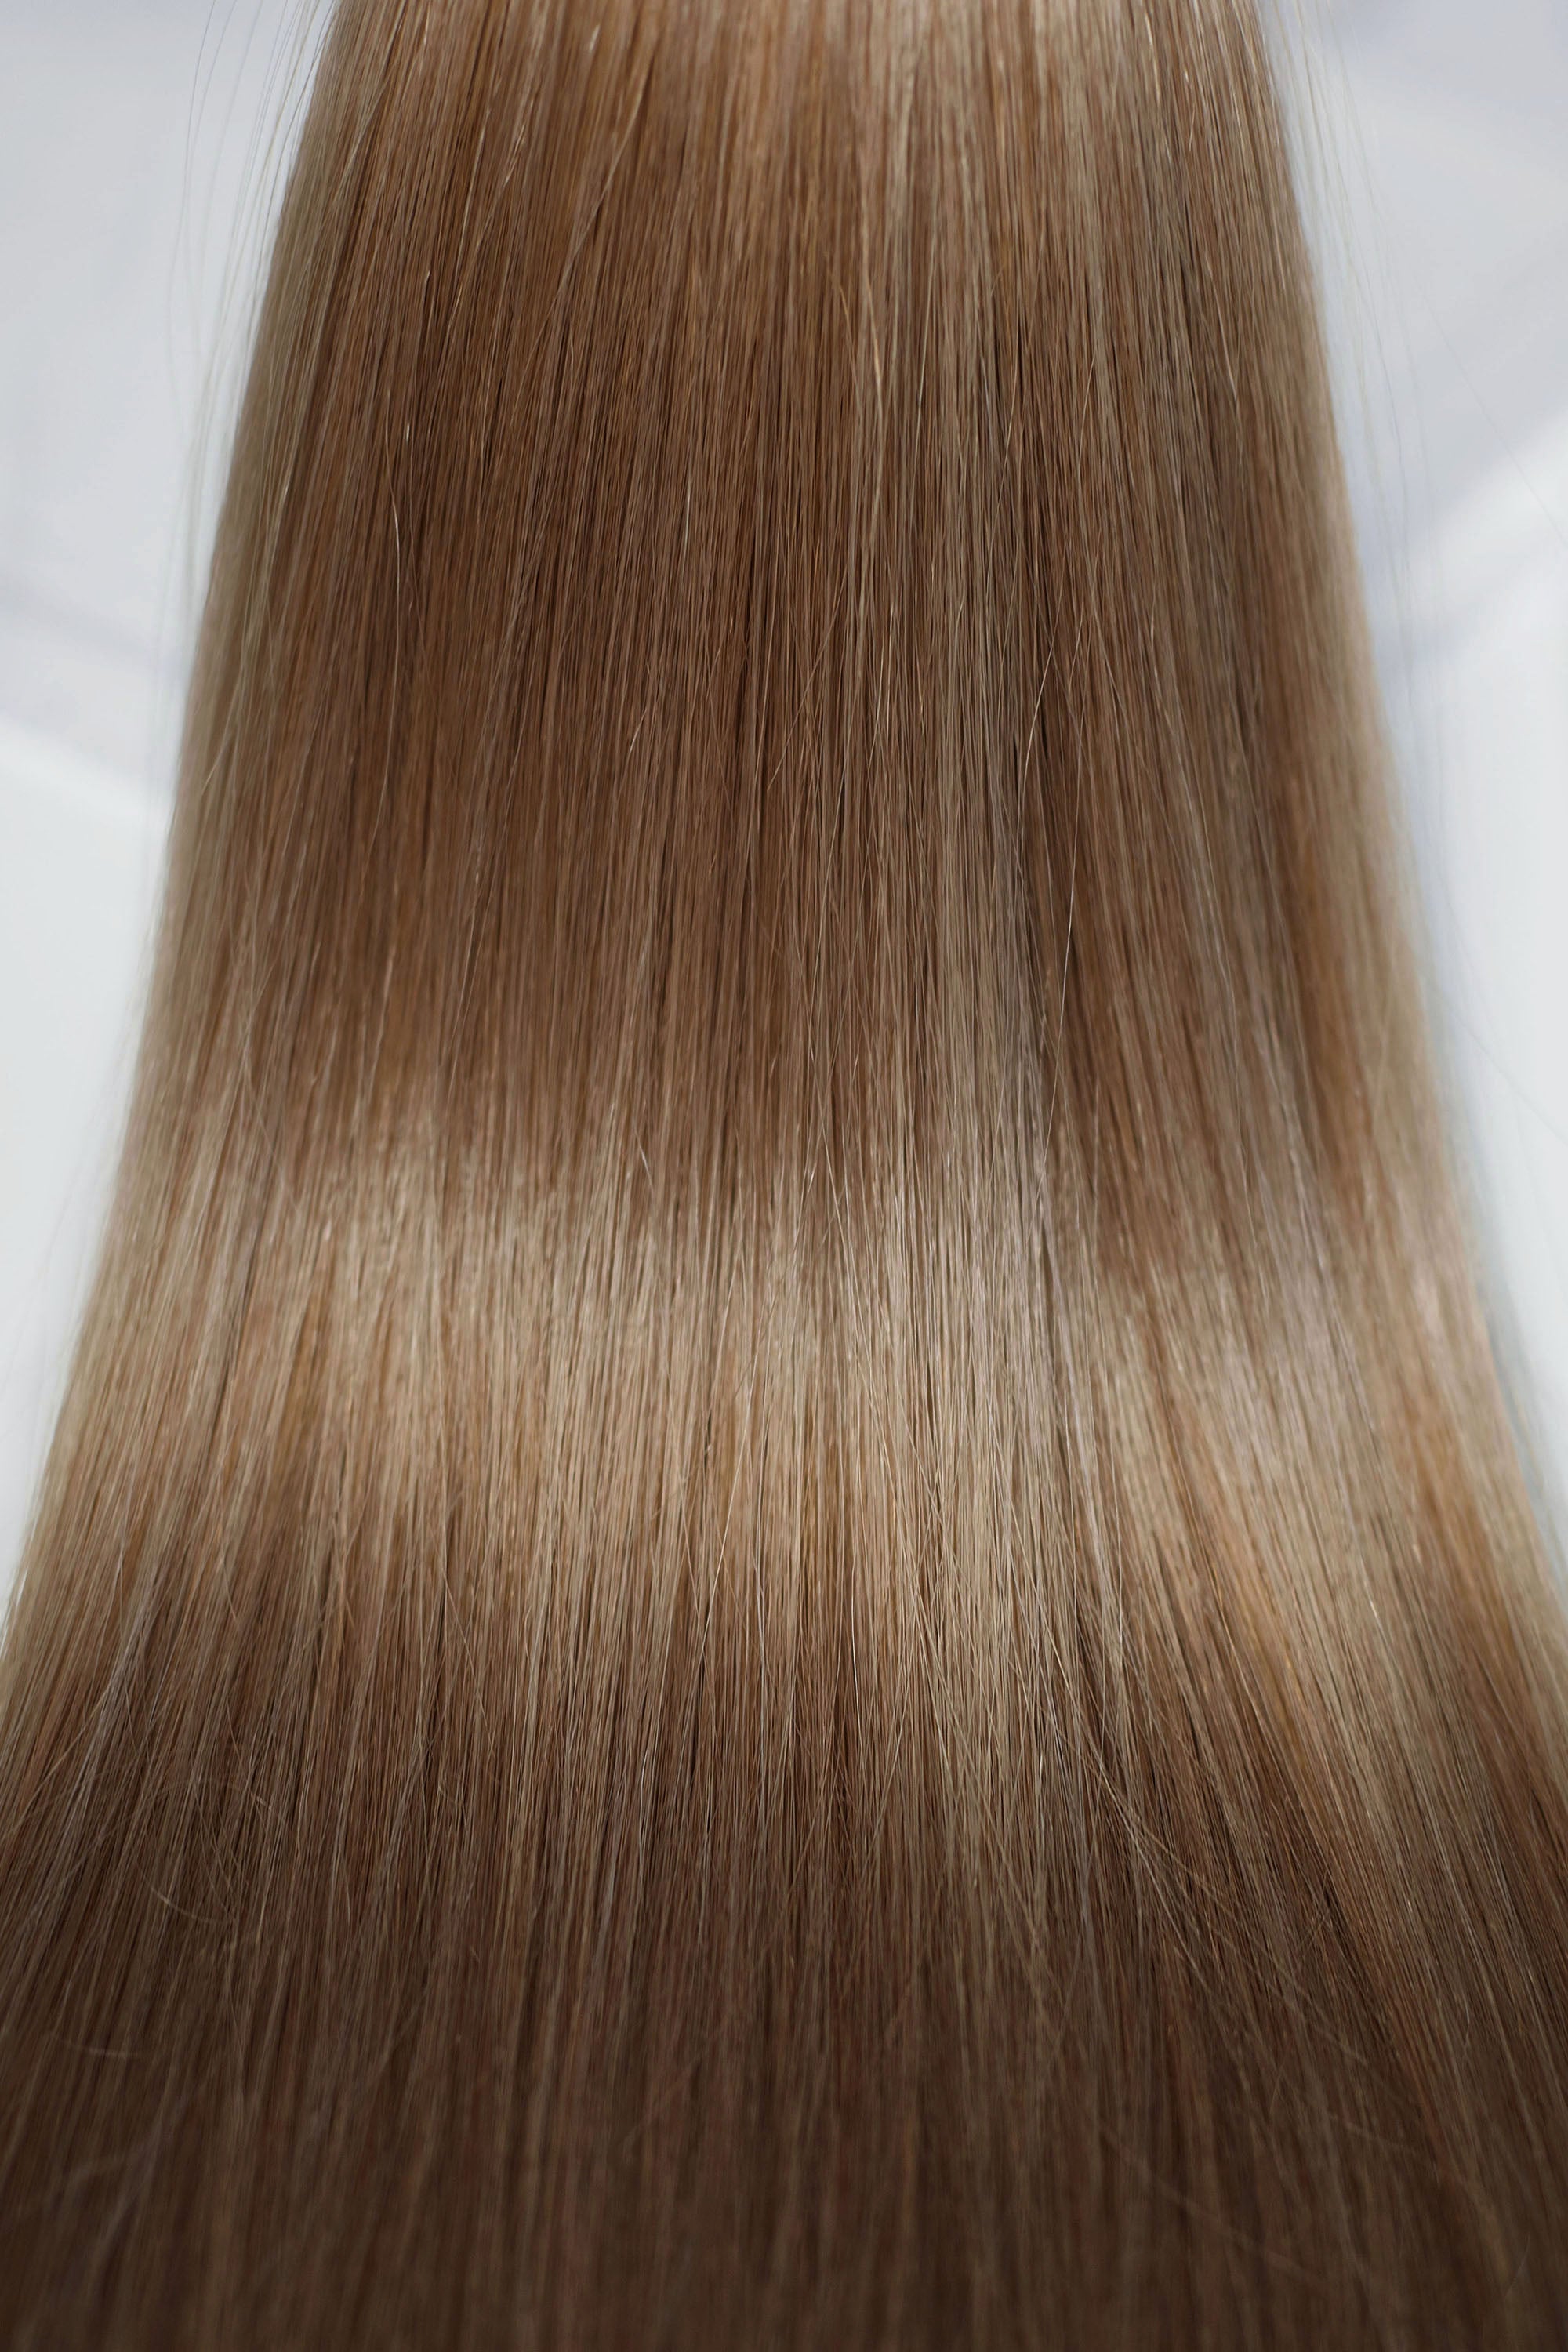 Behair professional Keratin Tip "Premium" 24" (60cm) Natural Straight Light Ash Brown #10 - 25g (1g each pcs) hair extensions